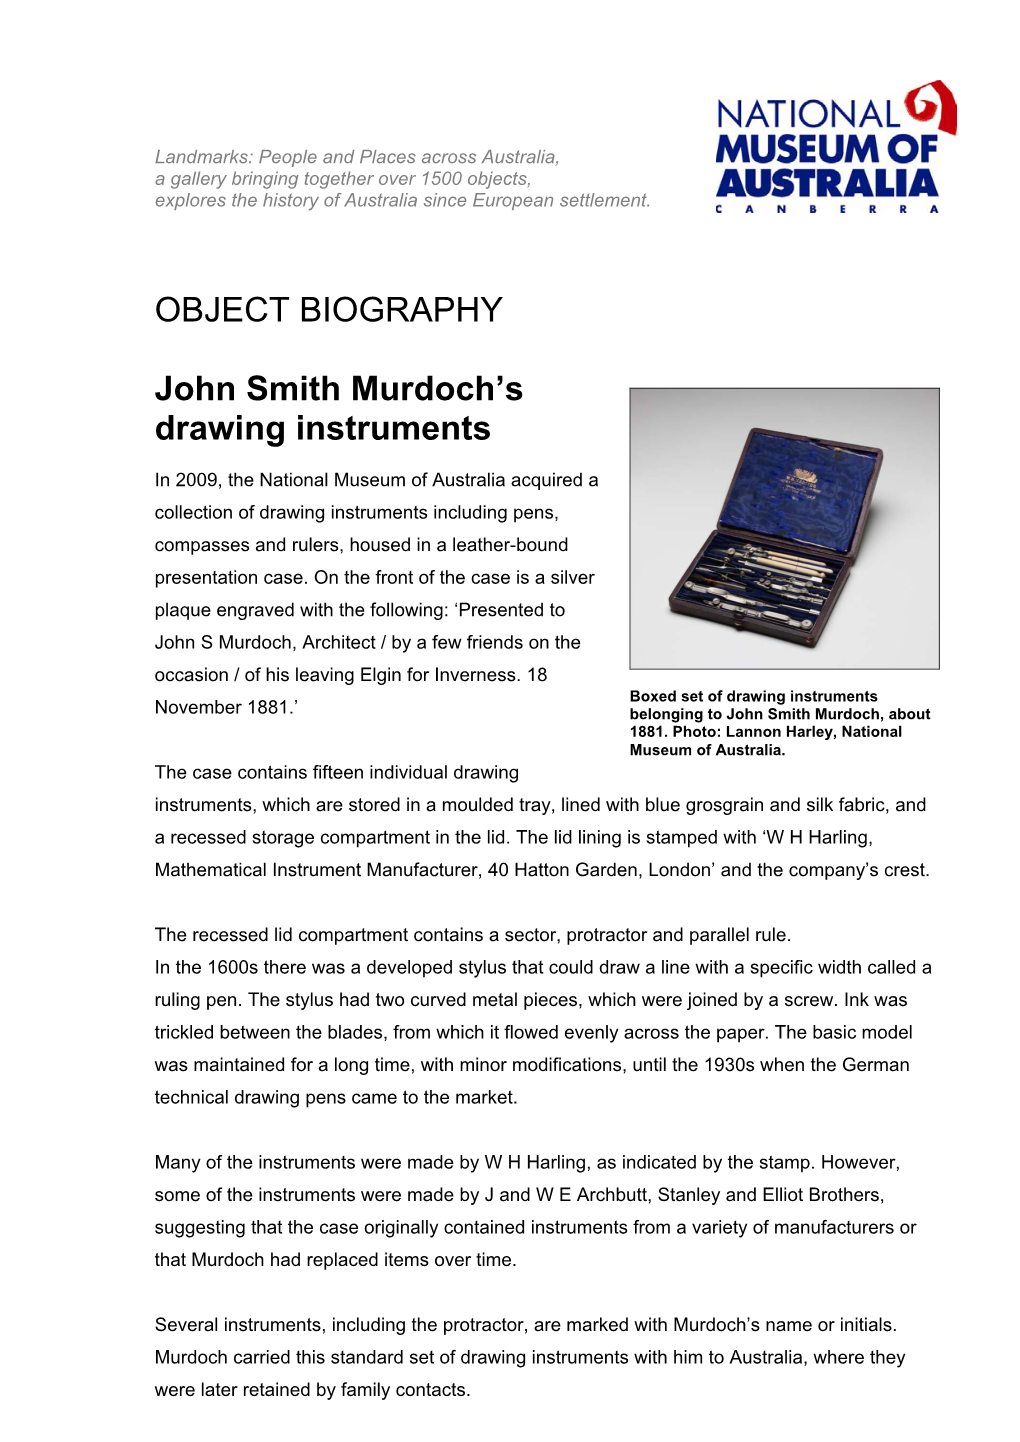 OBJECT BIOGRAPHY John Smith Murdoch's Drawing Instruments